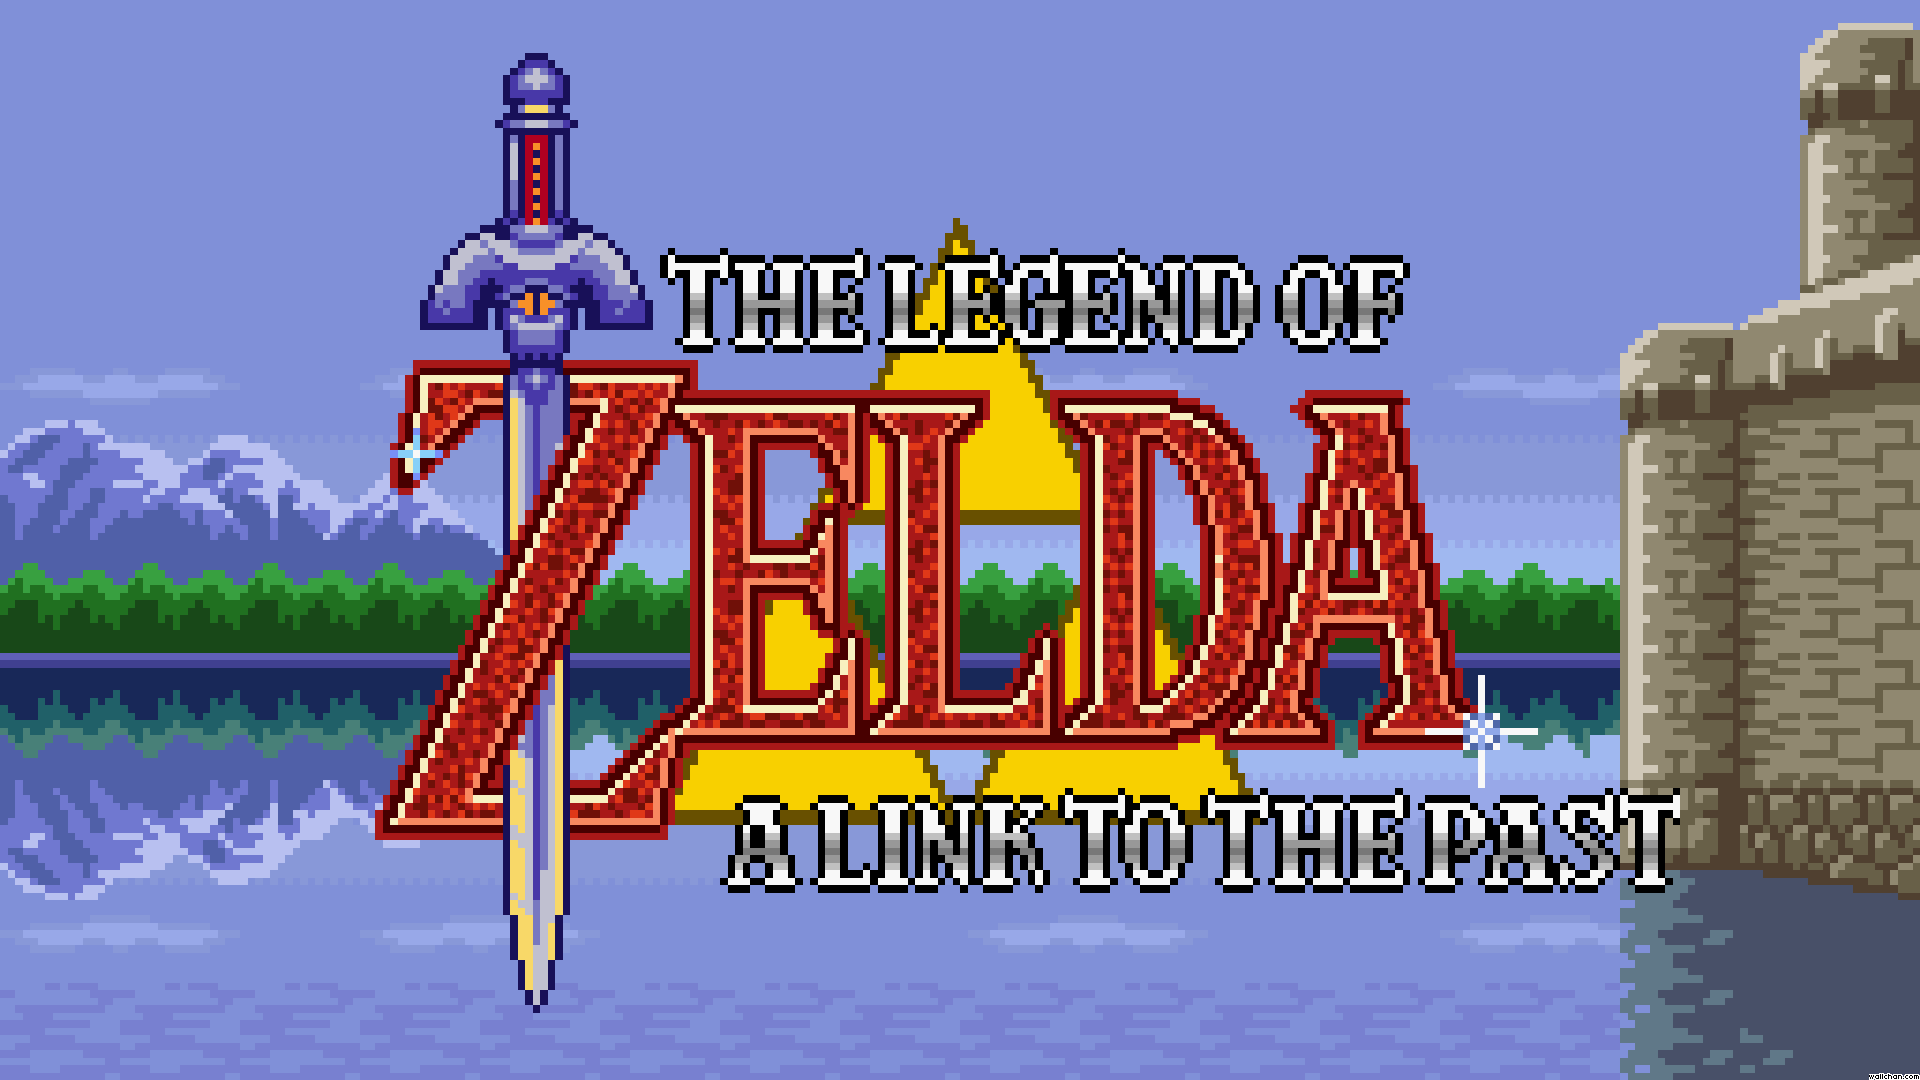 Legend of Zelda A Link to the Past original